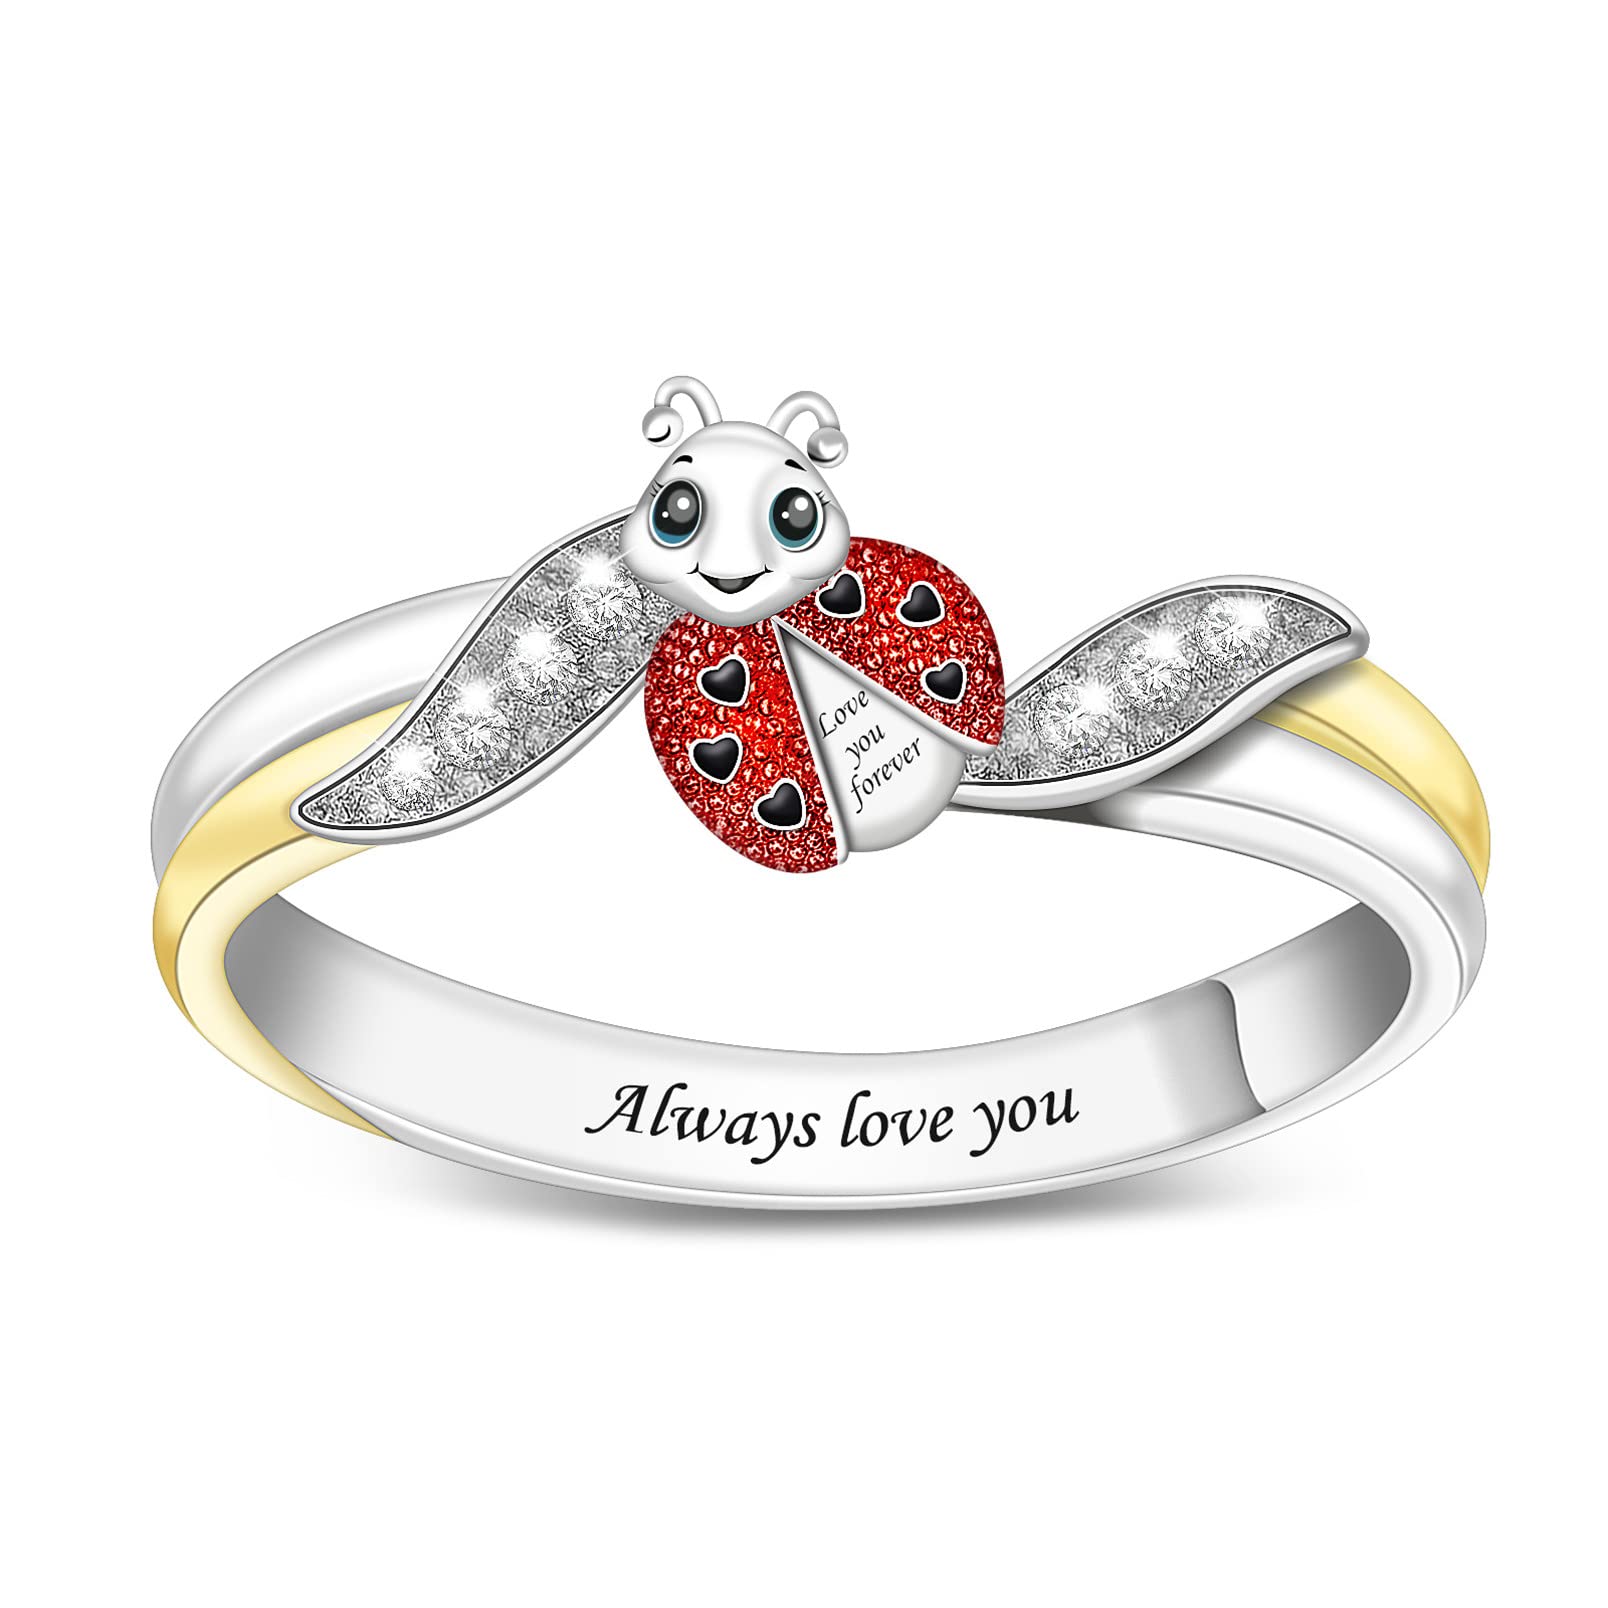 Personalized Ladybug Shaped Ring and Free Engraving.